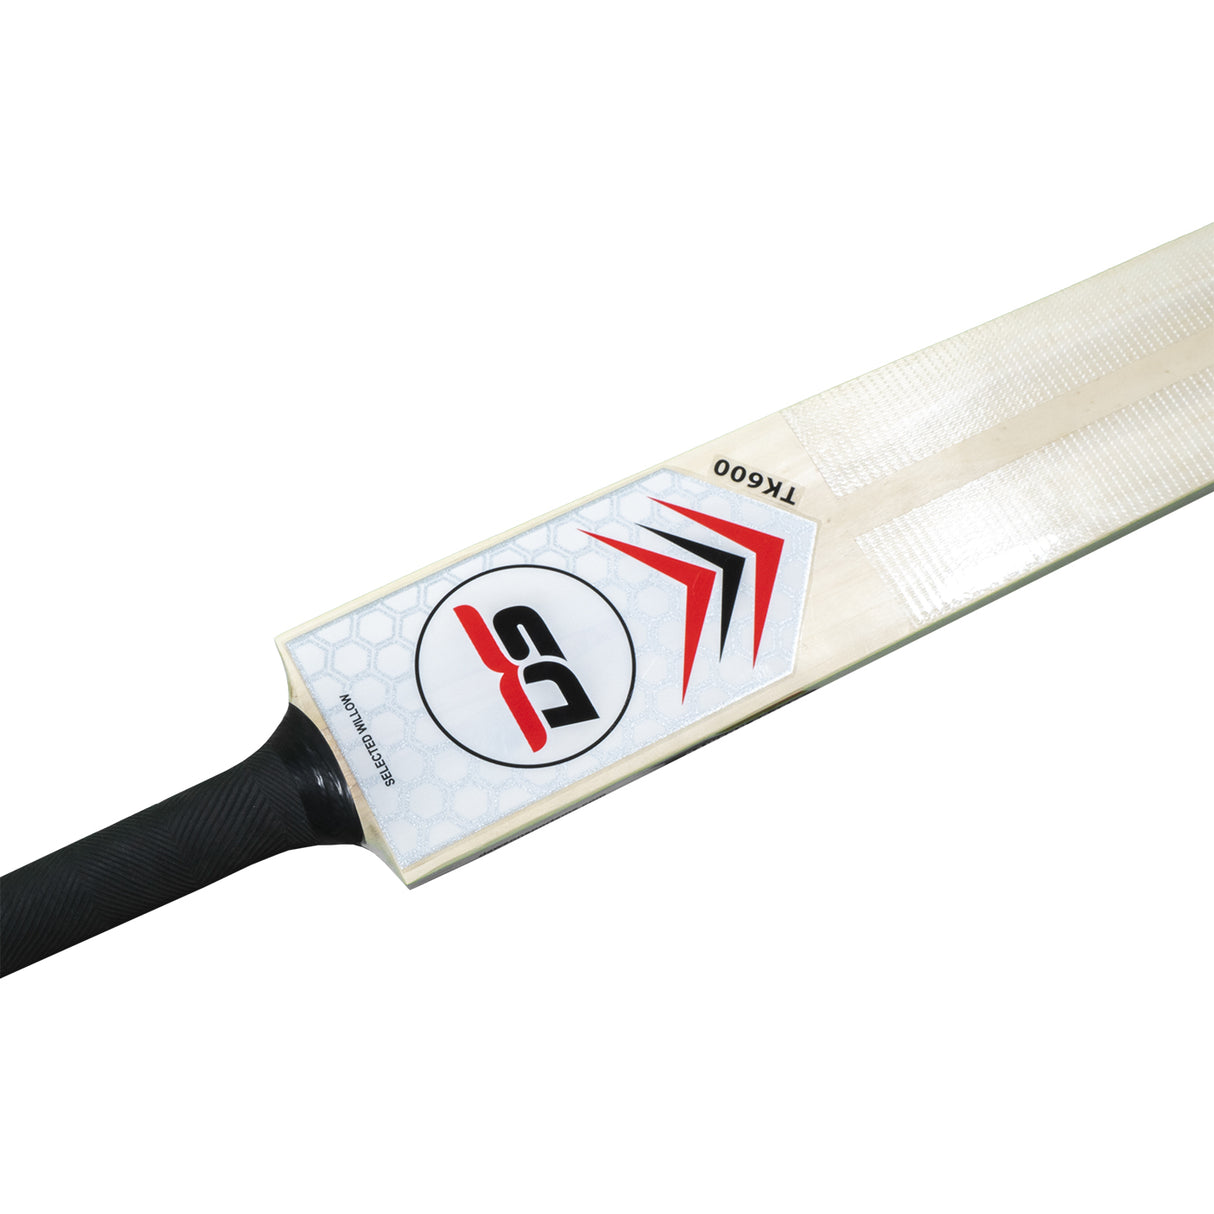 DS Cricket TK600 Hard Tennis Cricket Bat